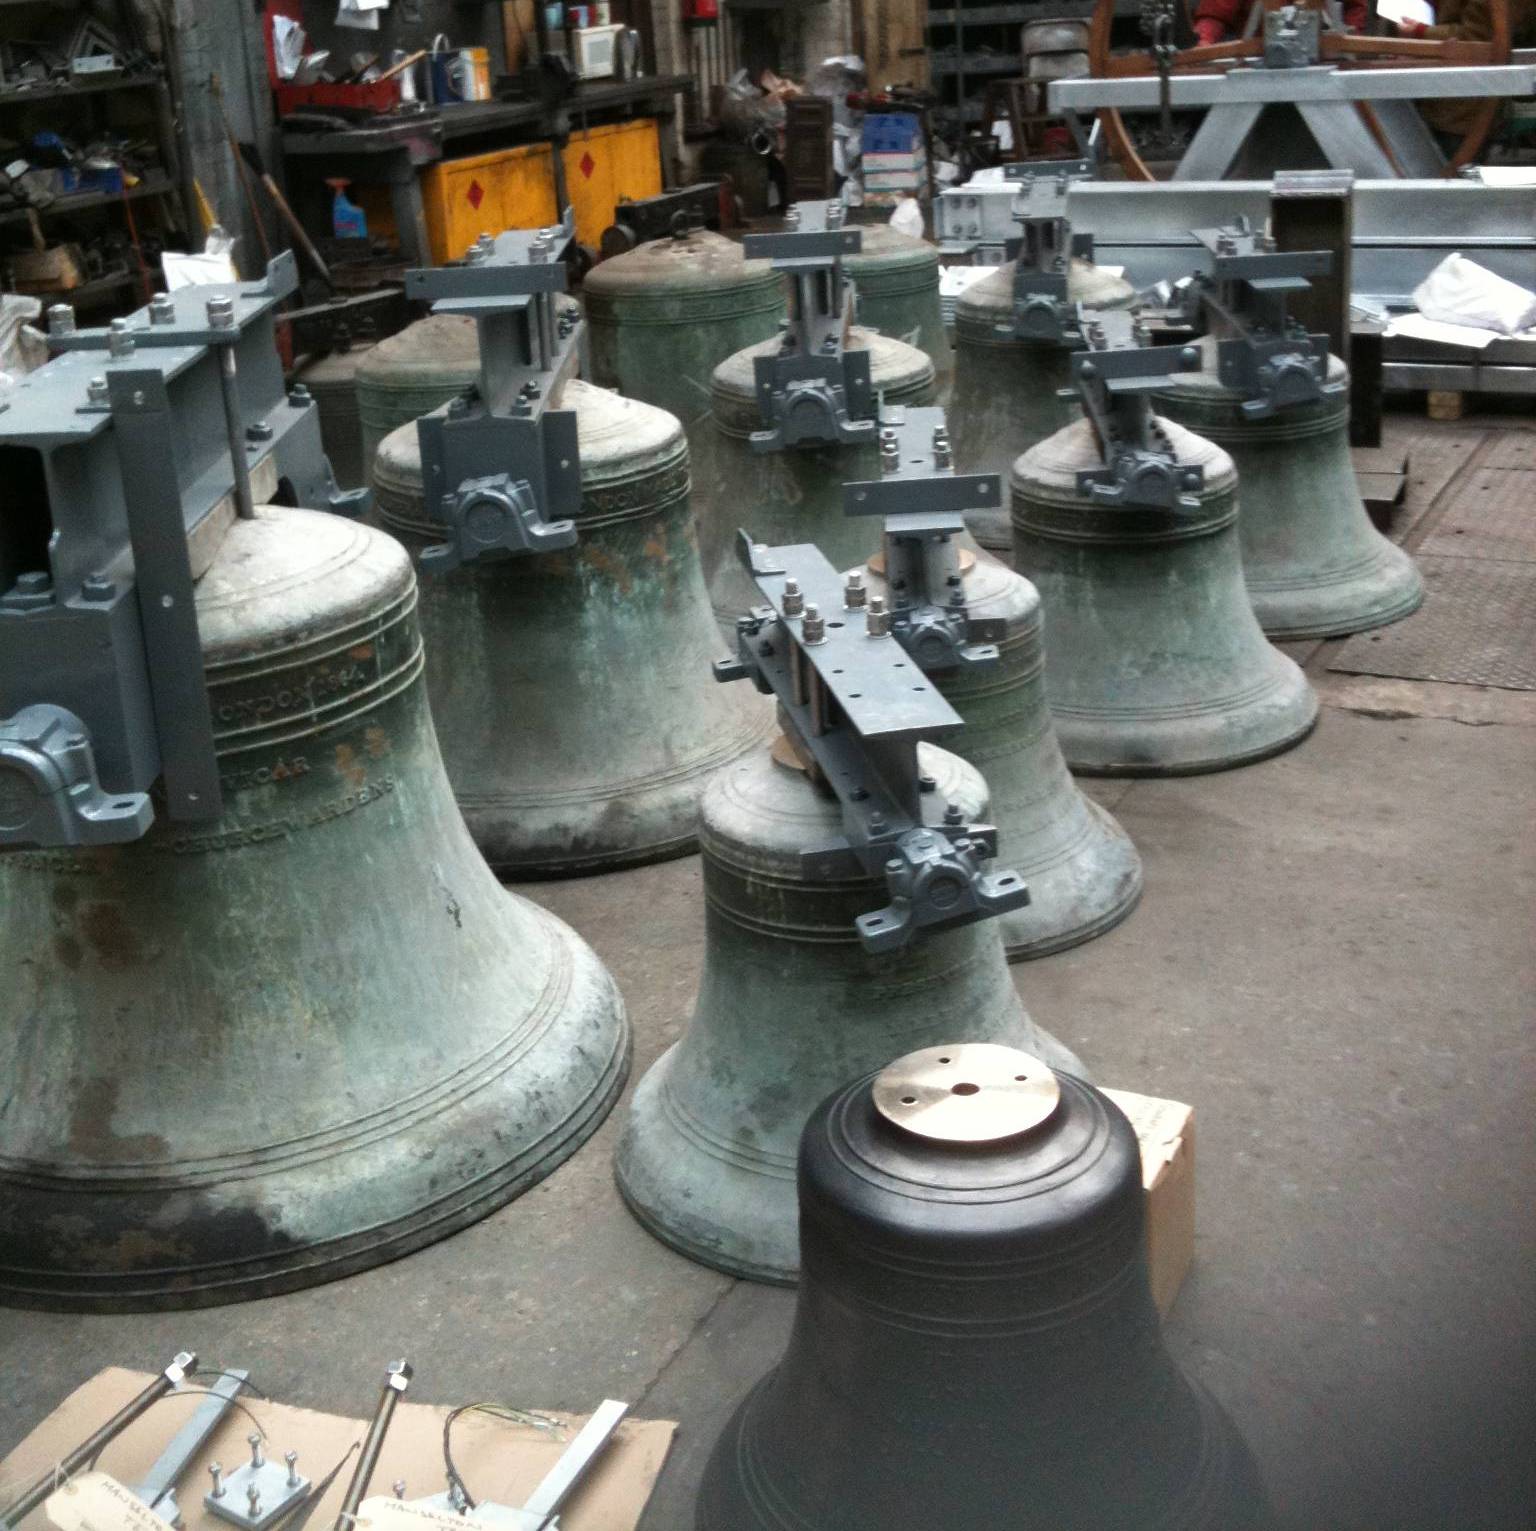 Bells in a workshop